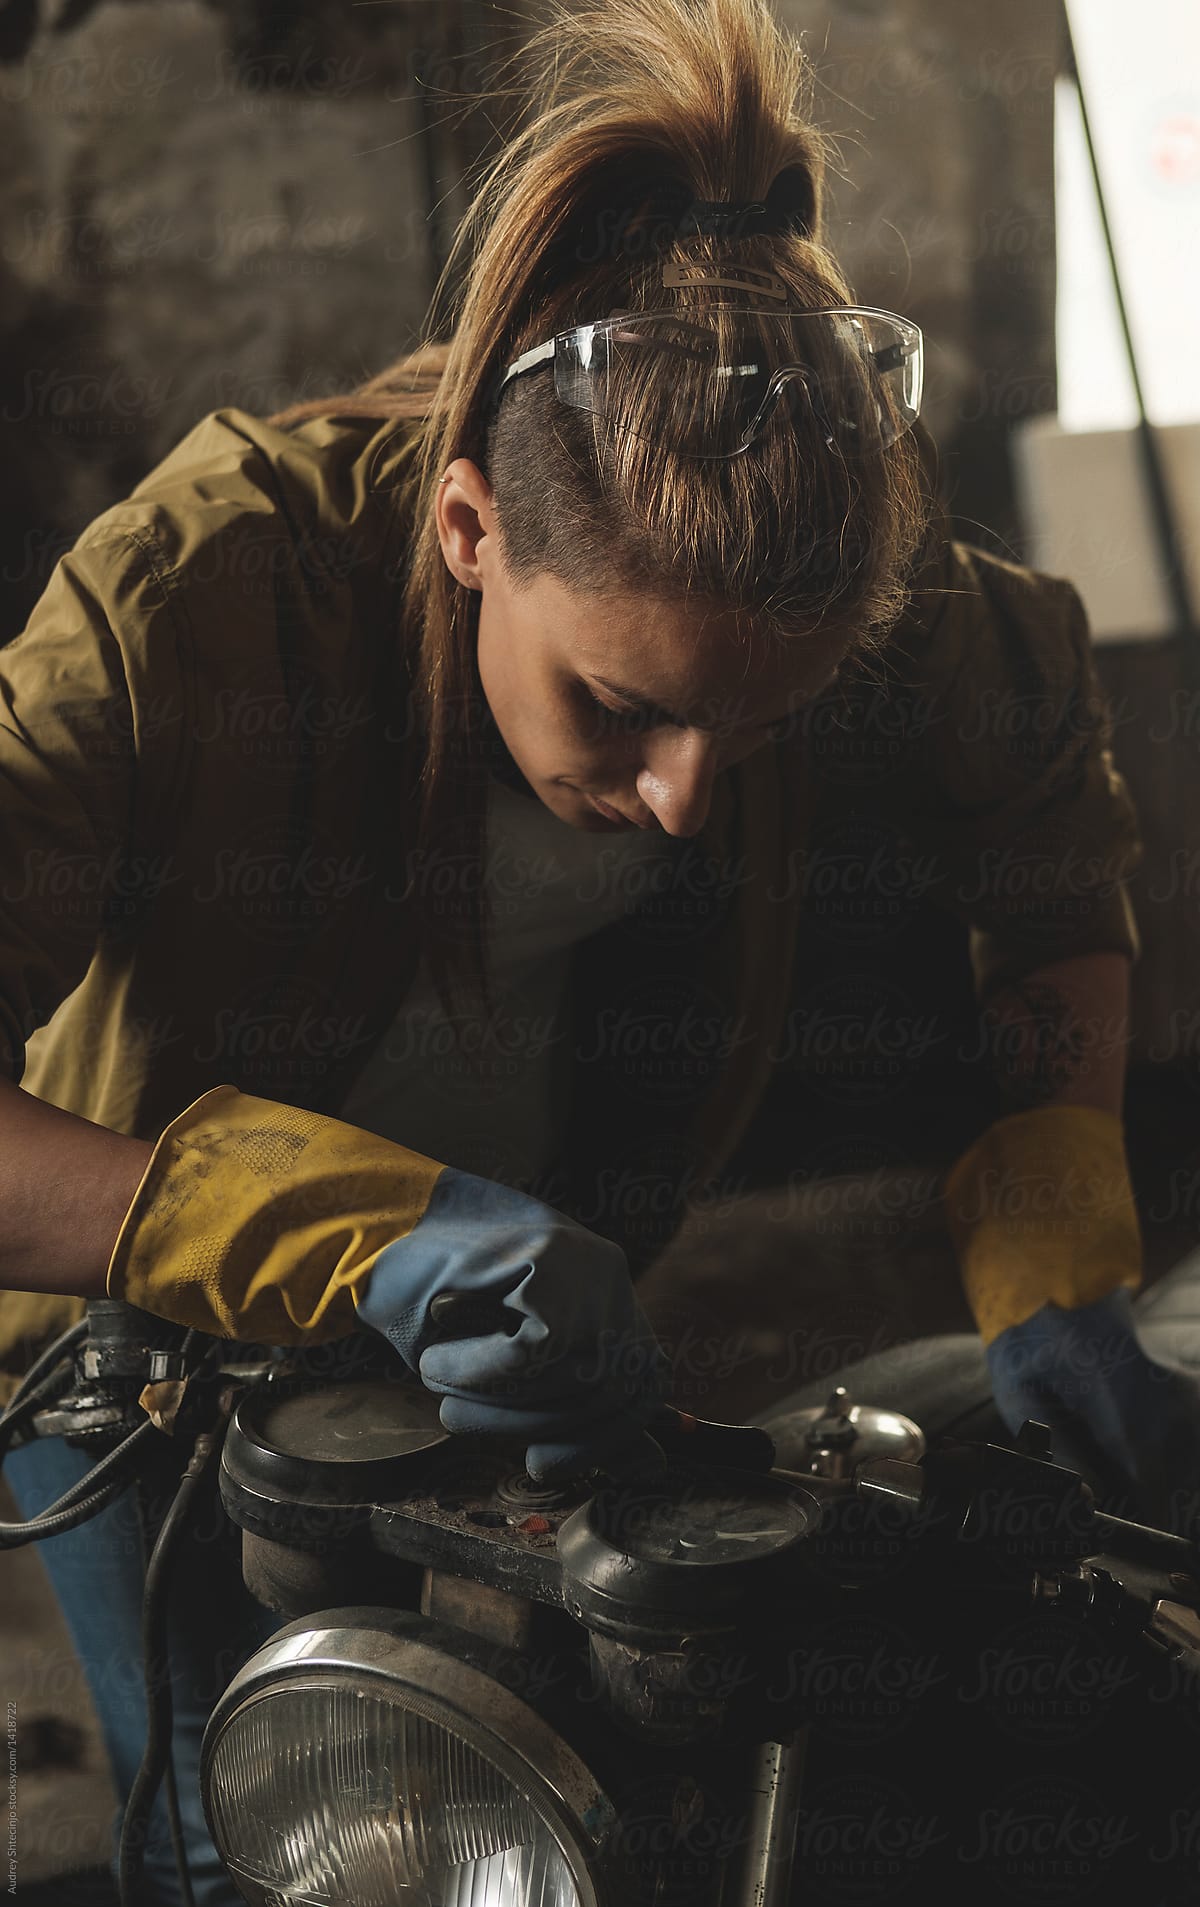 Young female working on restoration of old /vintage motorbikes in old rusty motorbike garage/workshop